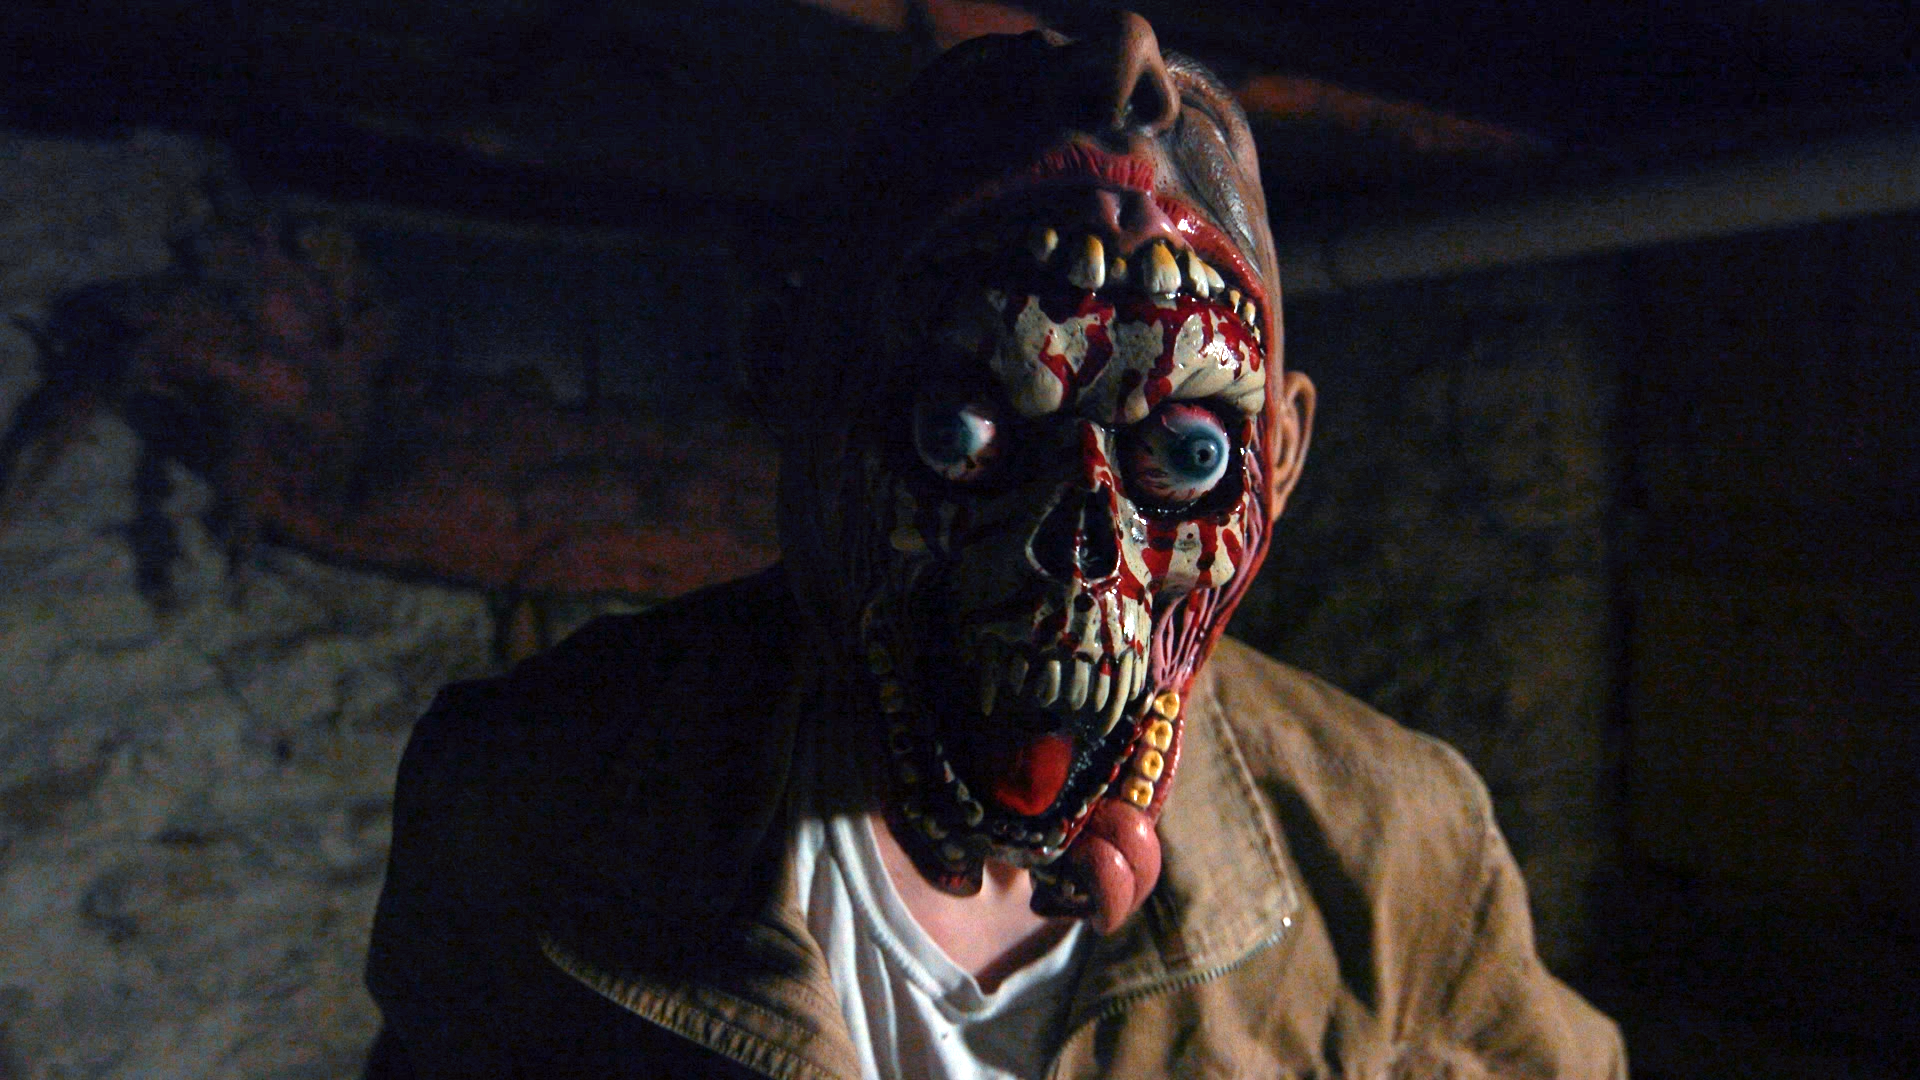 Split Face | Professional Halloween Movie Skull Mask